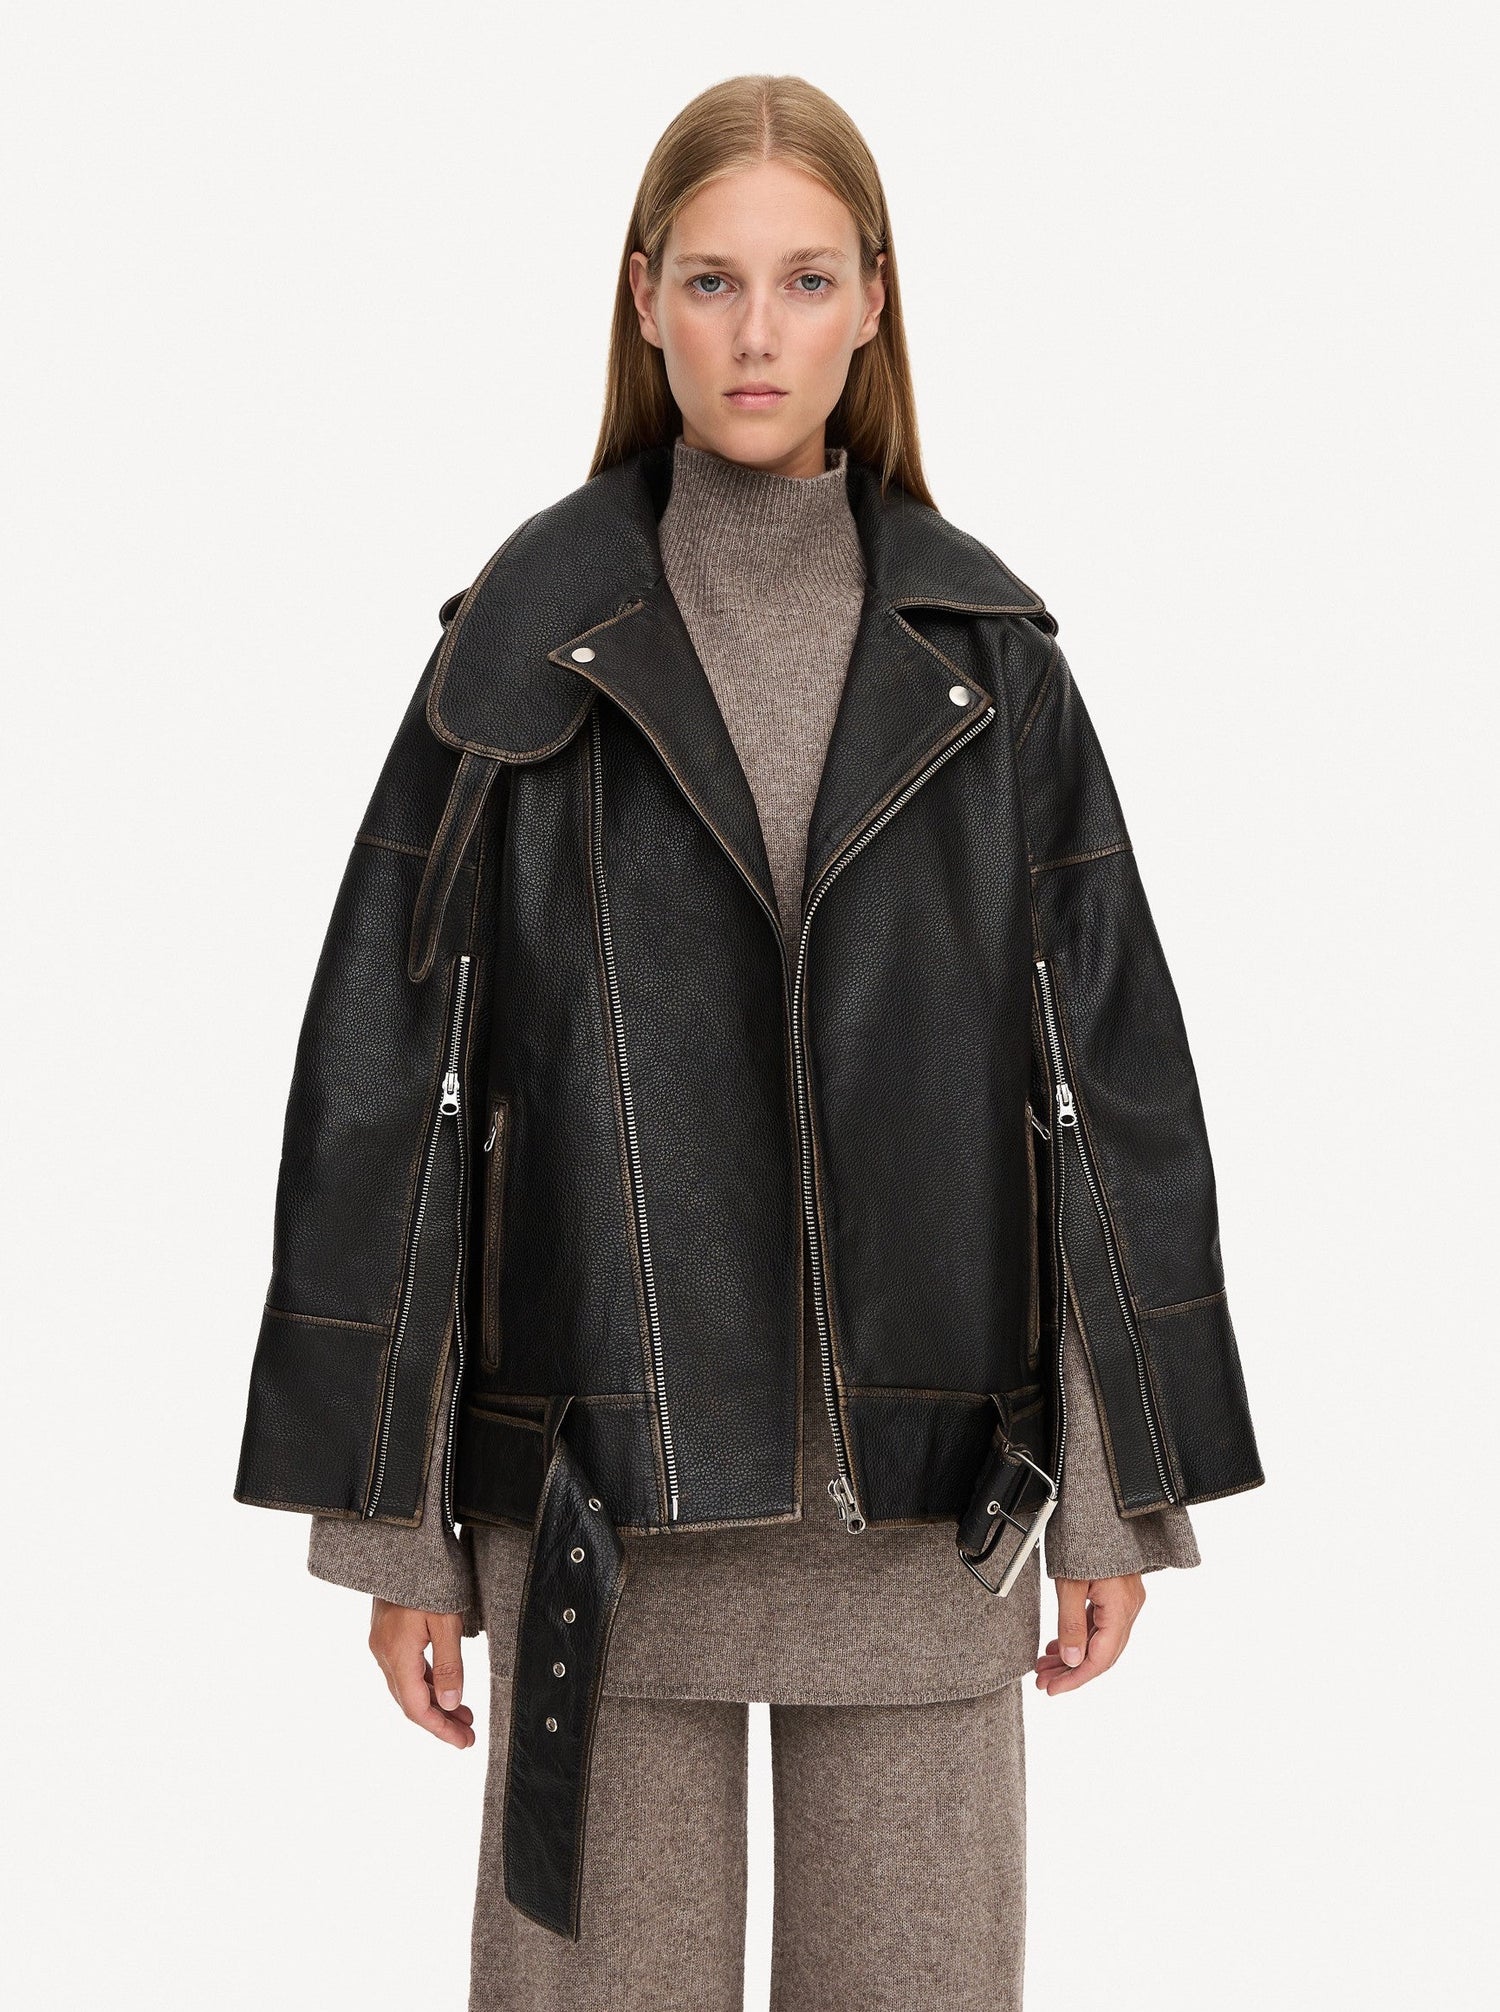 Beatrisse leather jacket, black